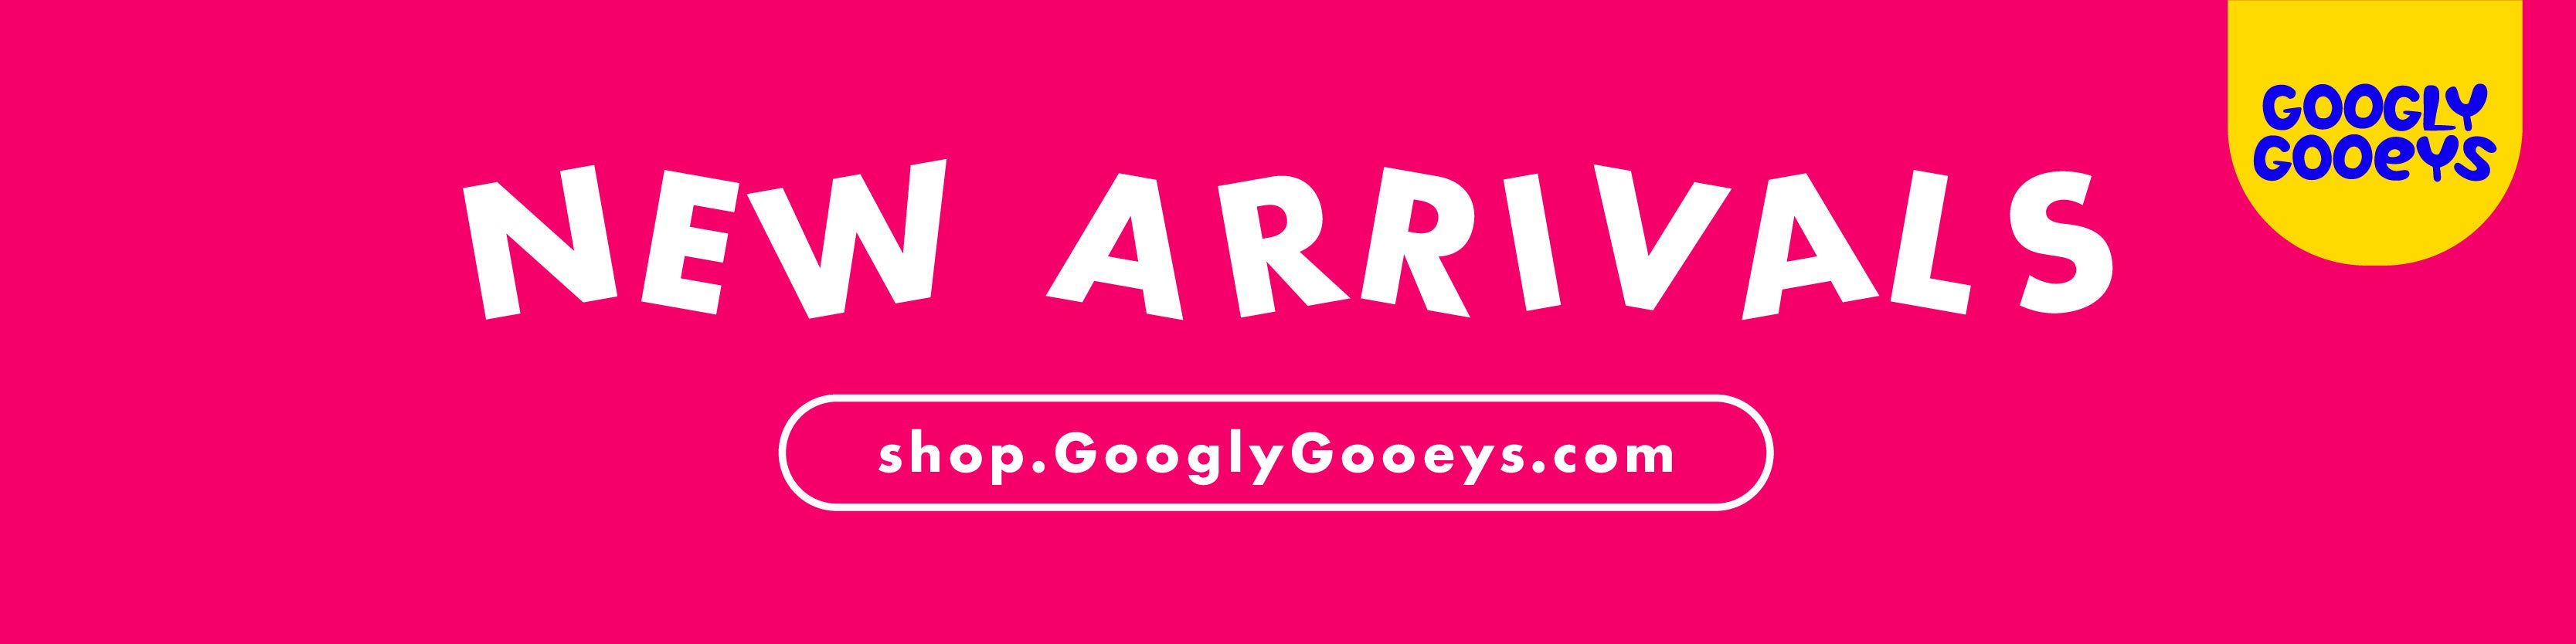 Googly Gooeys Shop - New Arrivals